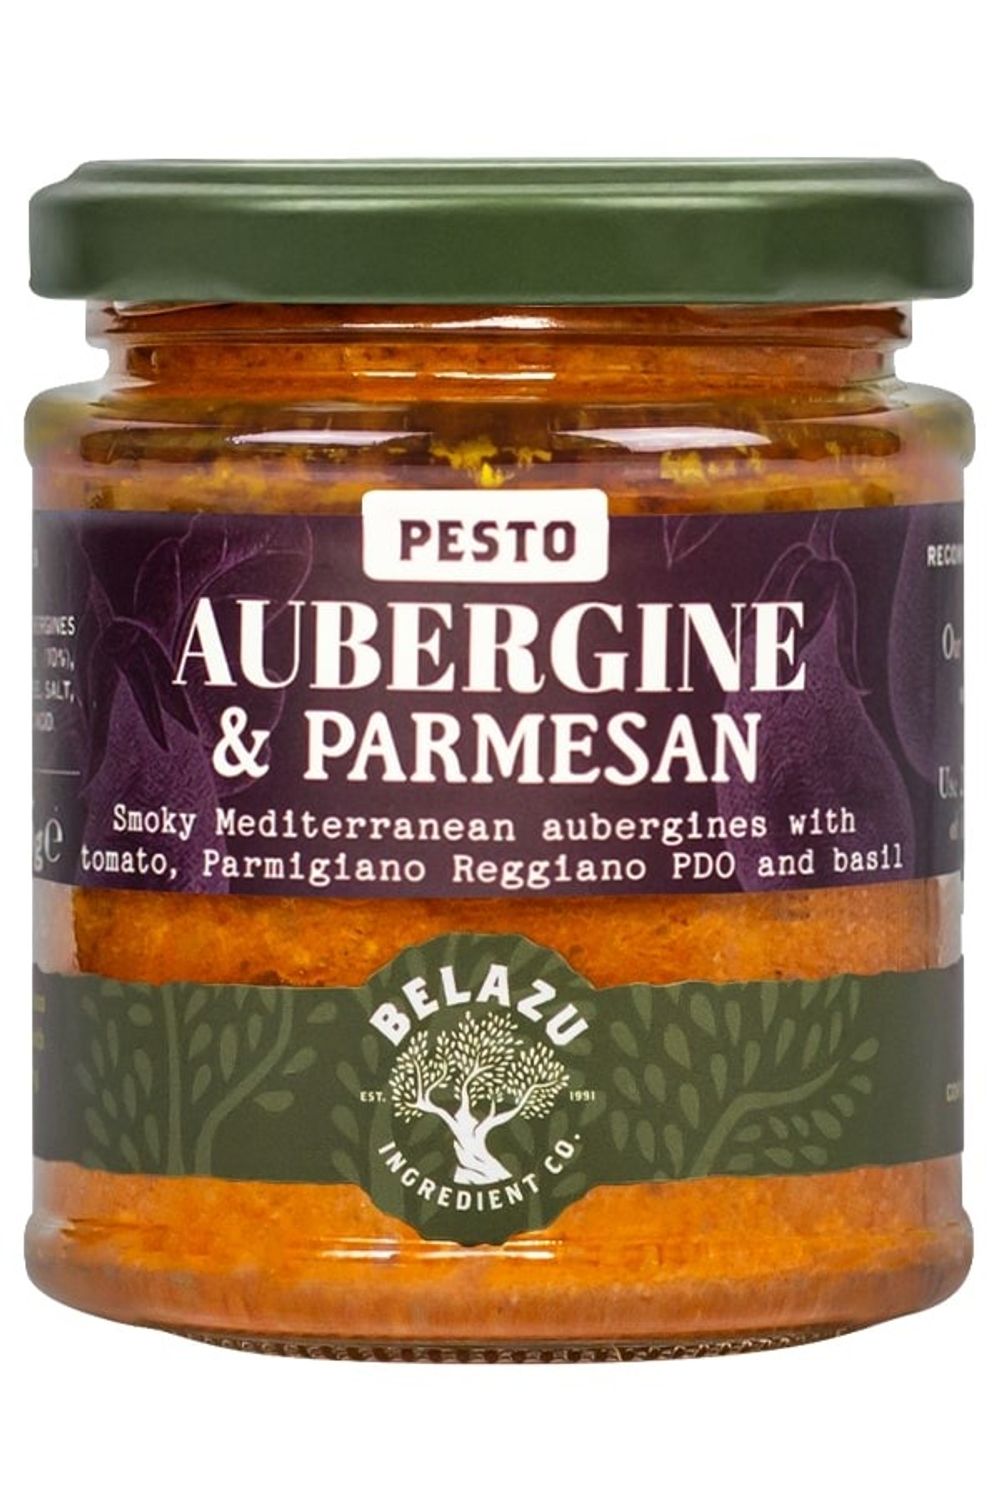 Aubergine & Parmesan Pesto